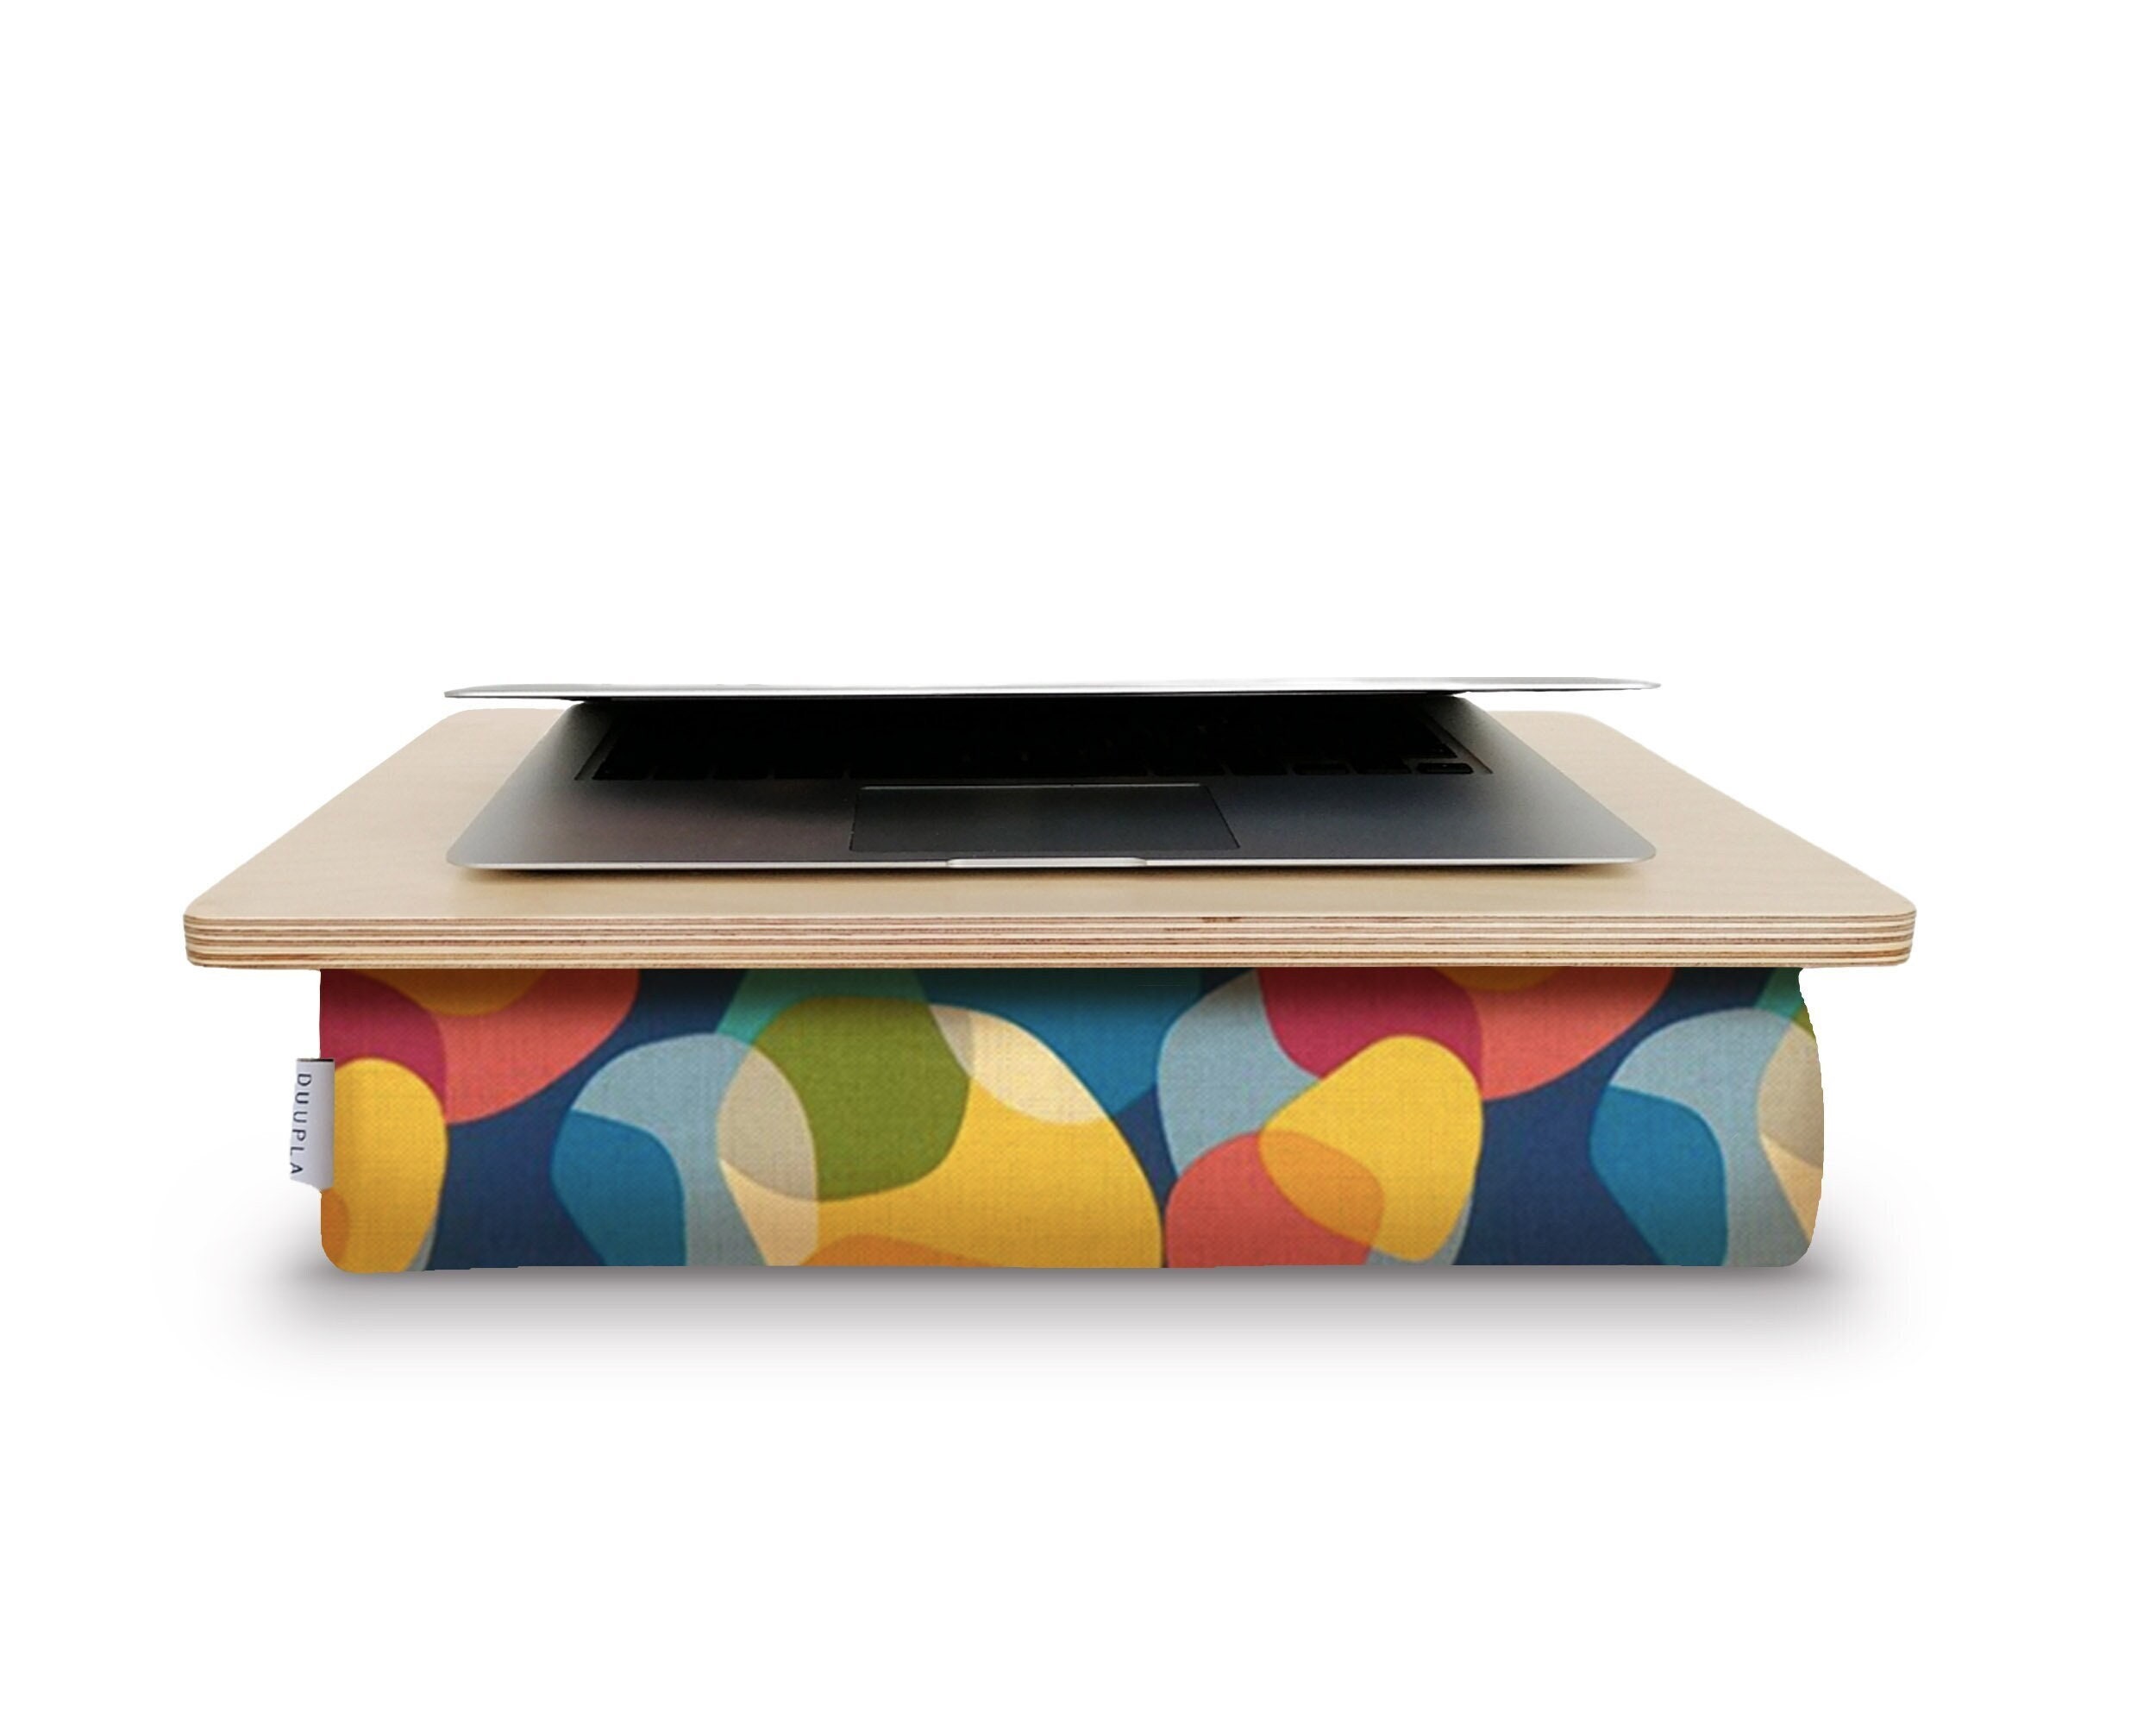 Faltbarer Tablet-Ständer für iPad, Tablet-PC, E-Book-Reader & Co.